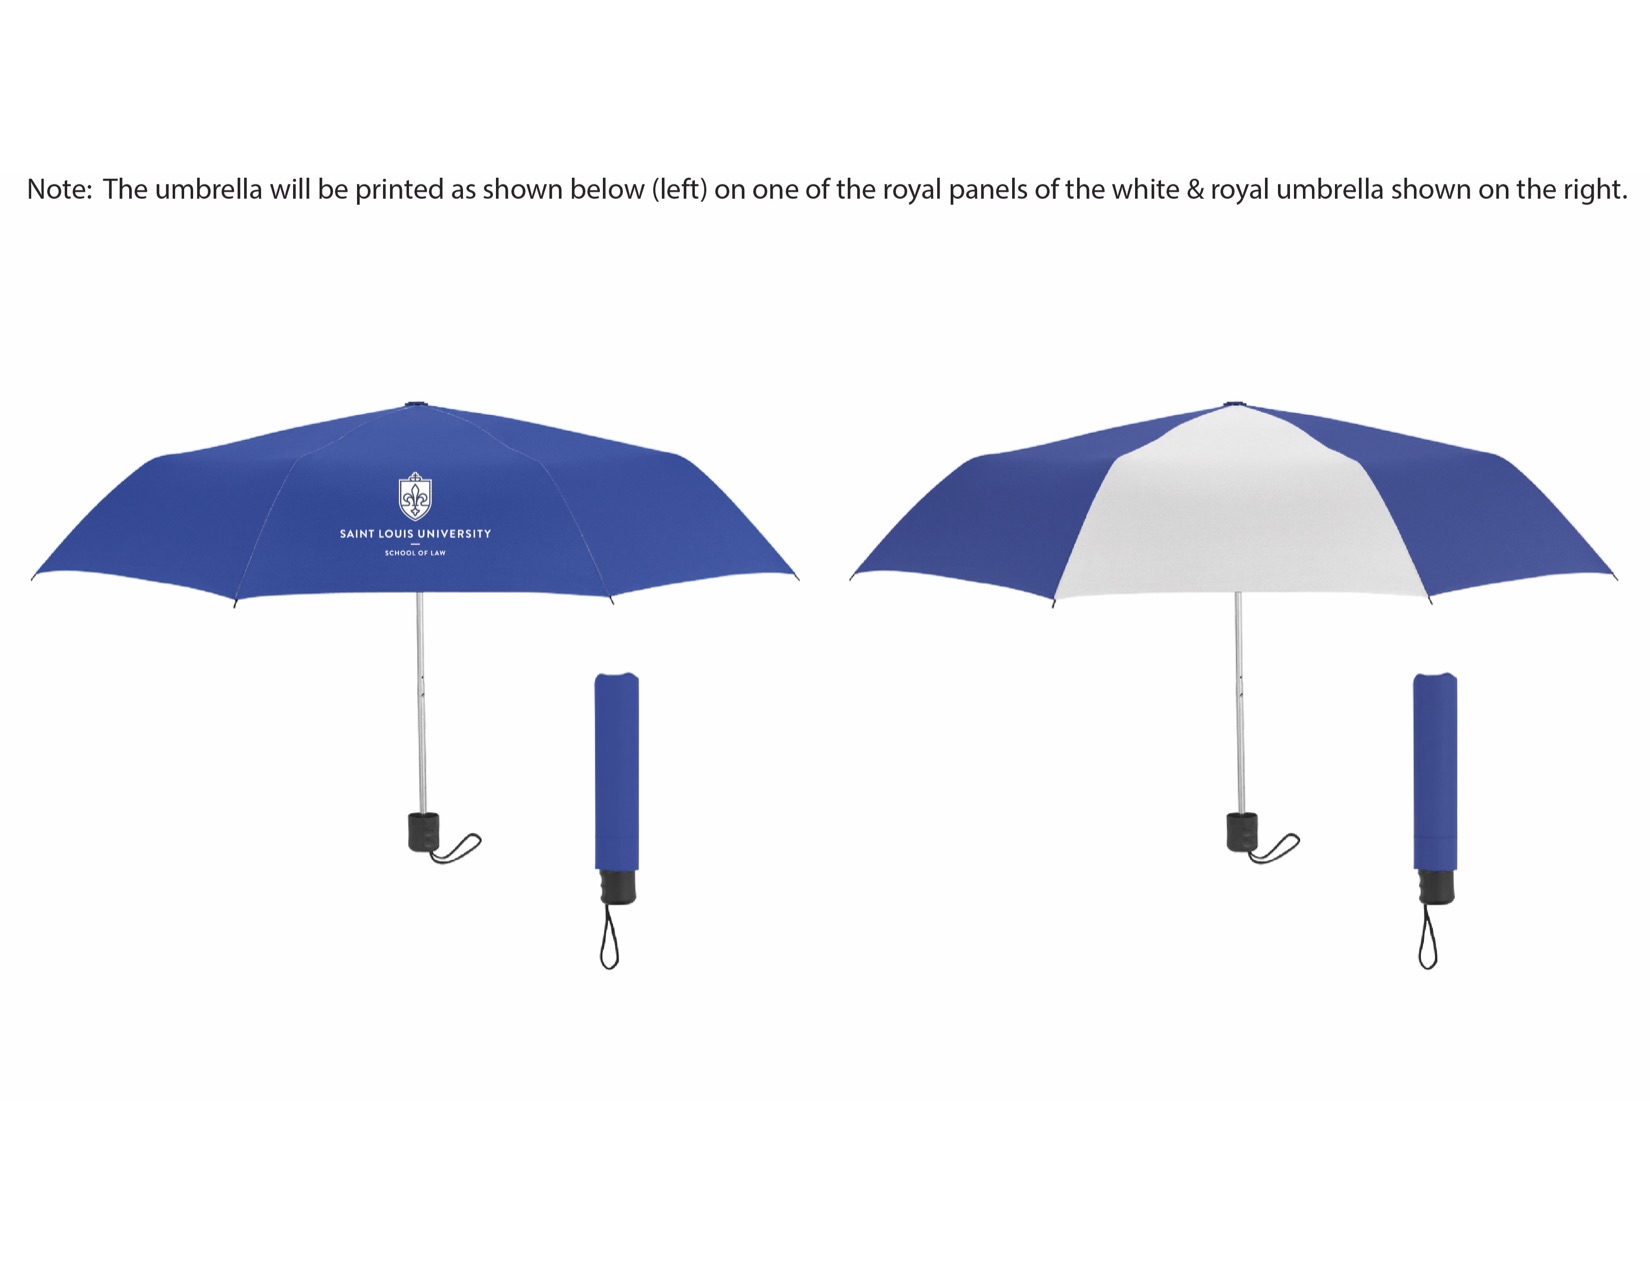 SLU LAW Umbrella